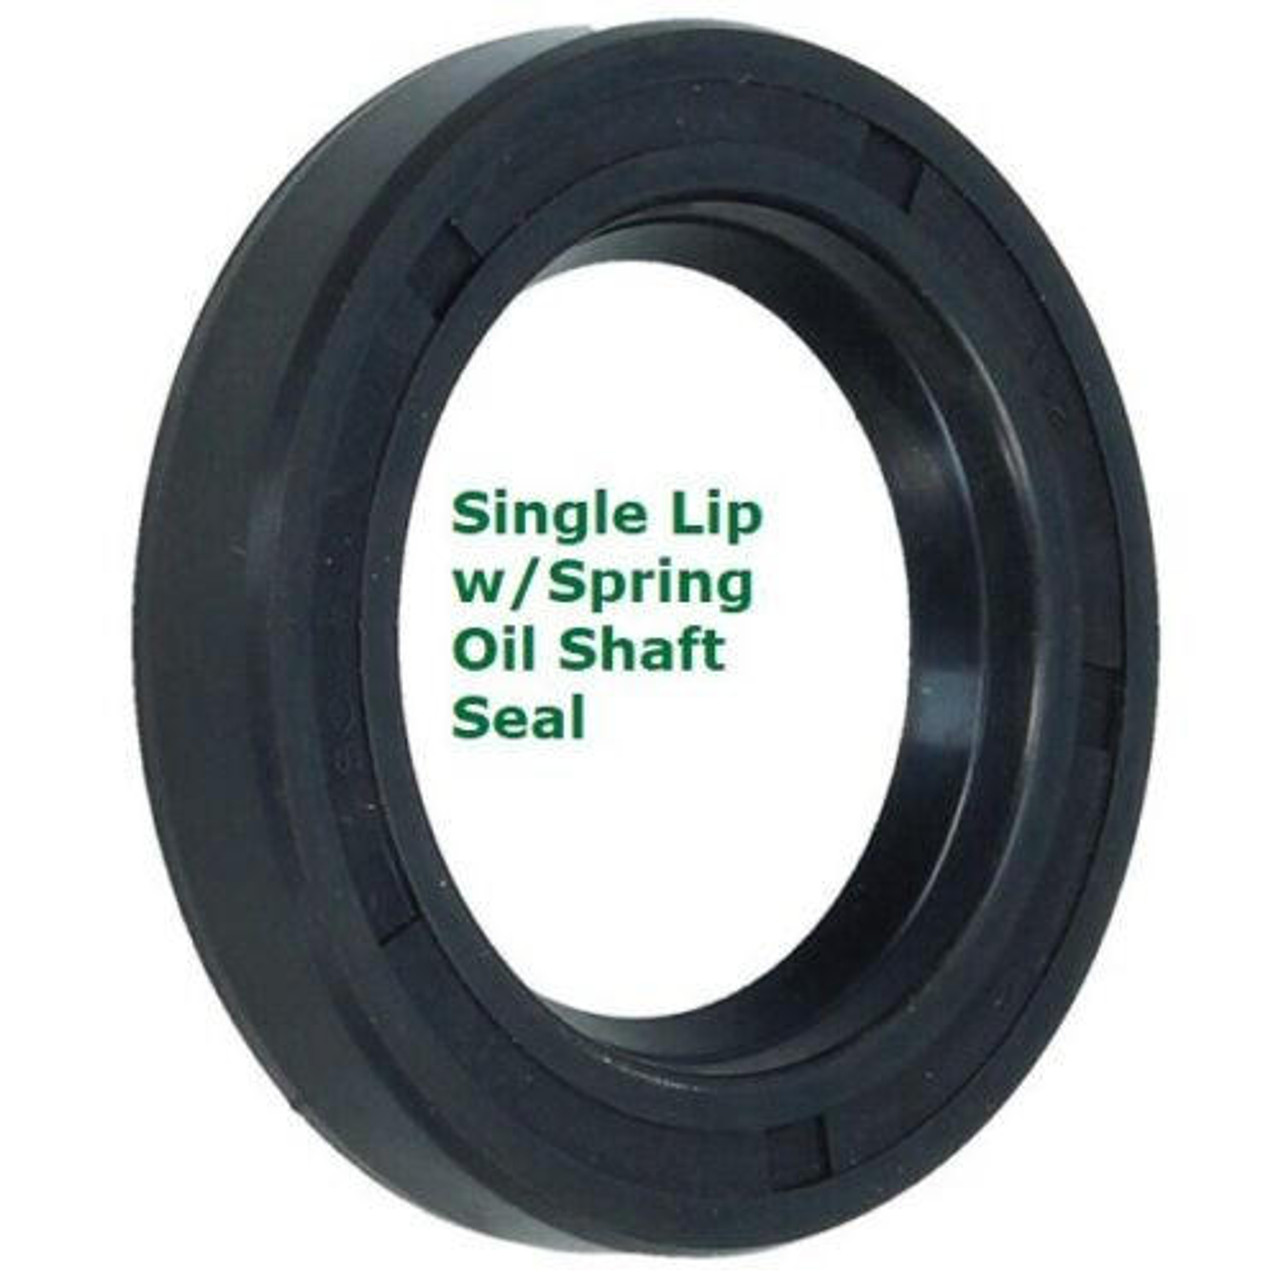 Metric Oil Shaft Seal 25 x 40 x 7mm Single Lip Ref# CR692313 Price for 1 pc